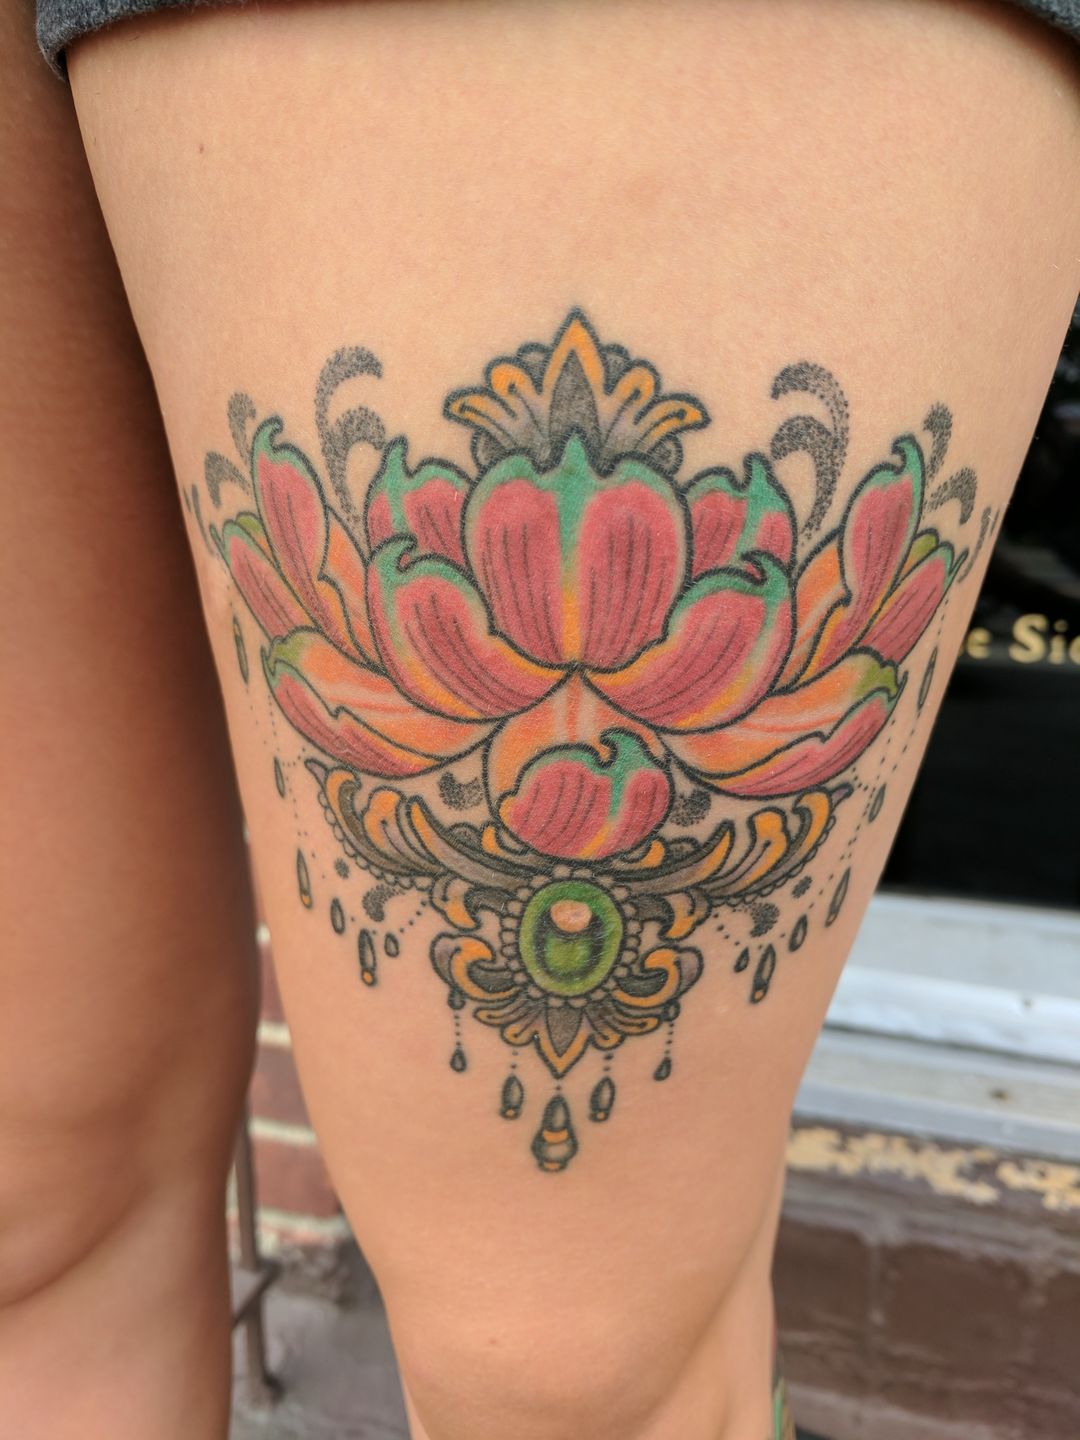 Heather Maerten  on Instagram Commission completed Lotus flower tattoo  design to honor her three children      art artist artwork  instaart ink tattoo